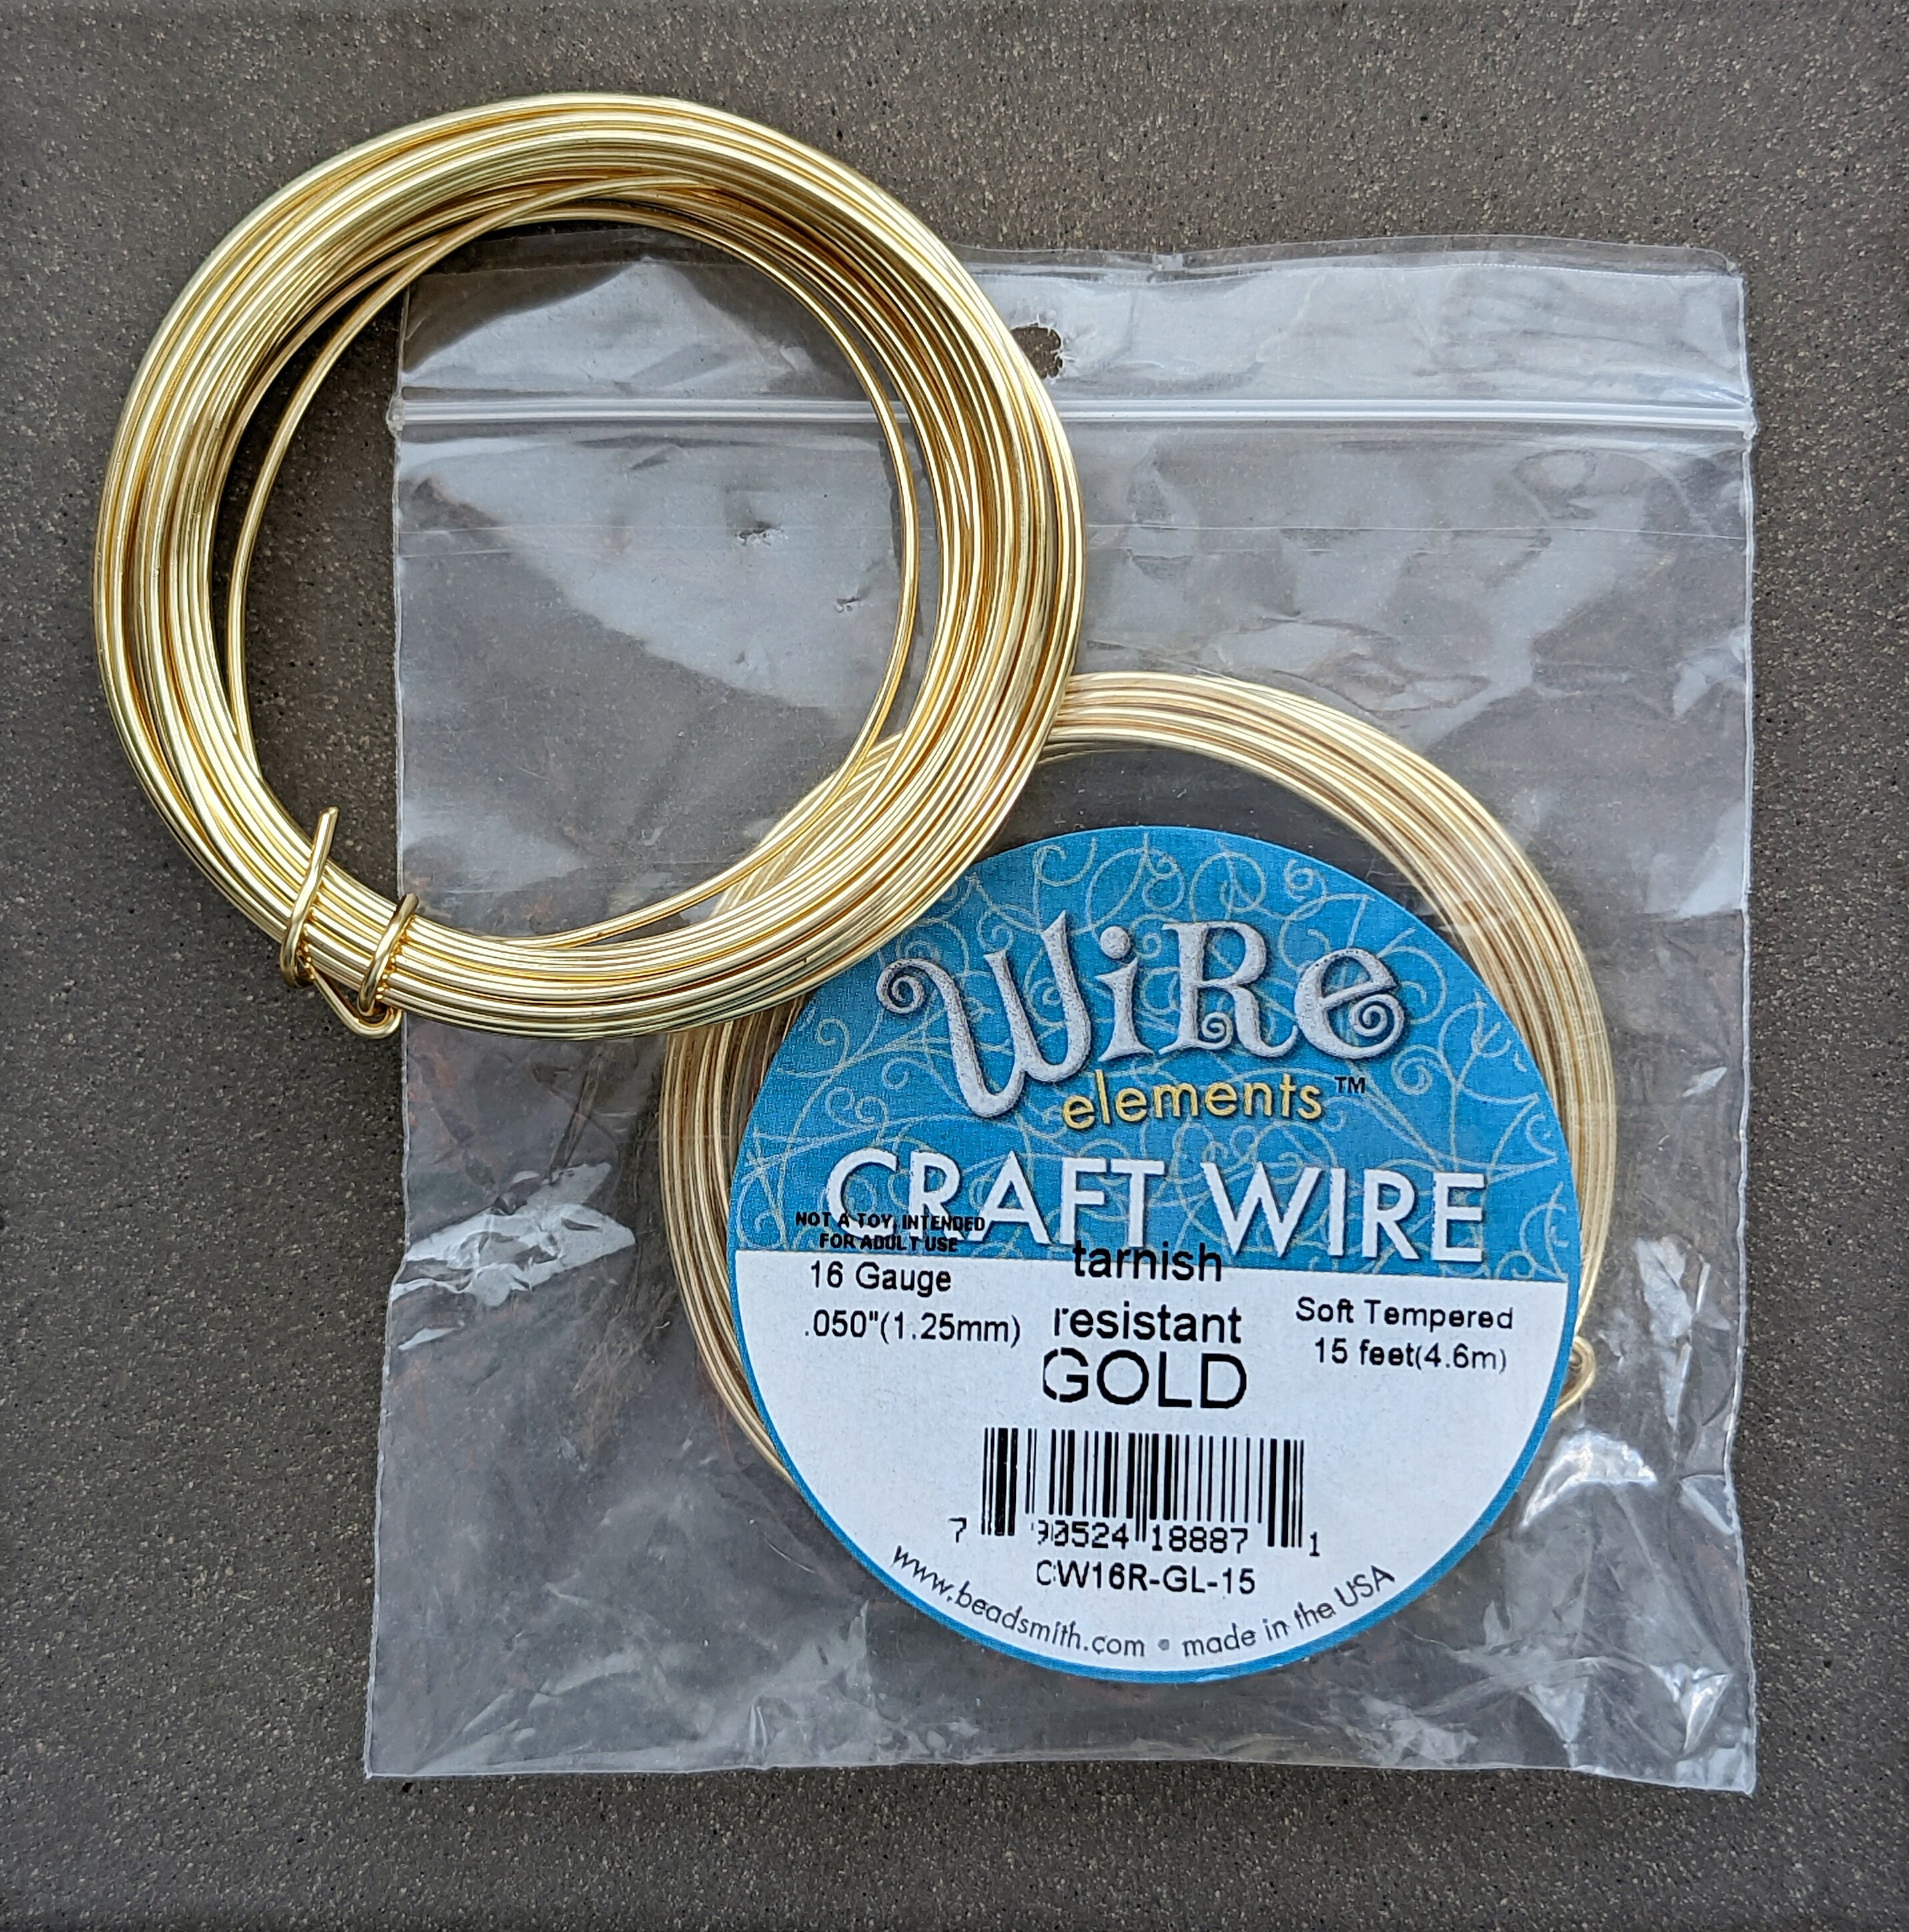 BULK, 18 Gauge, Non Tarnish Gold, Colored Copper Craft Wire, 1 LB (200 Feet)